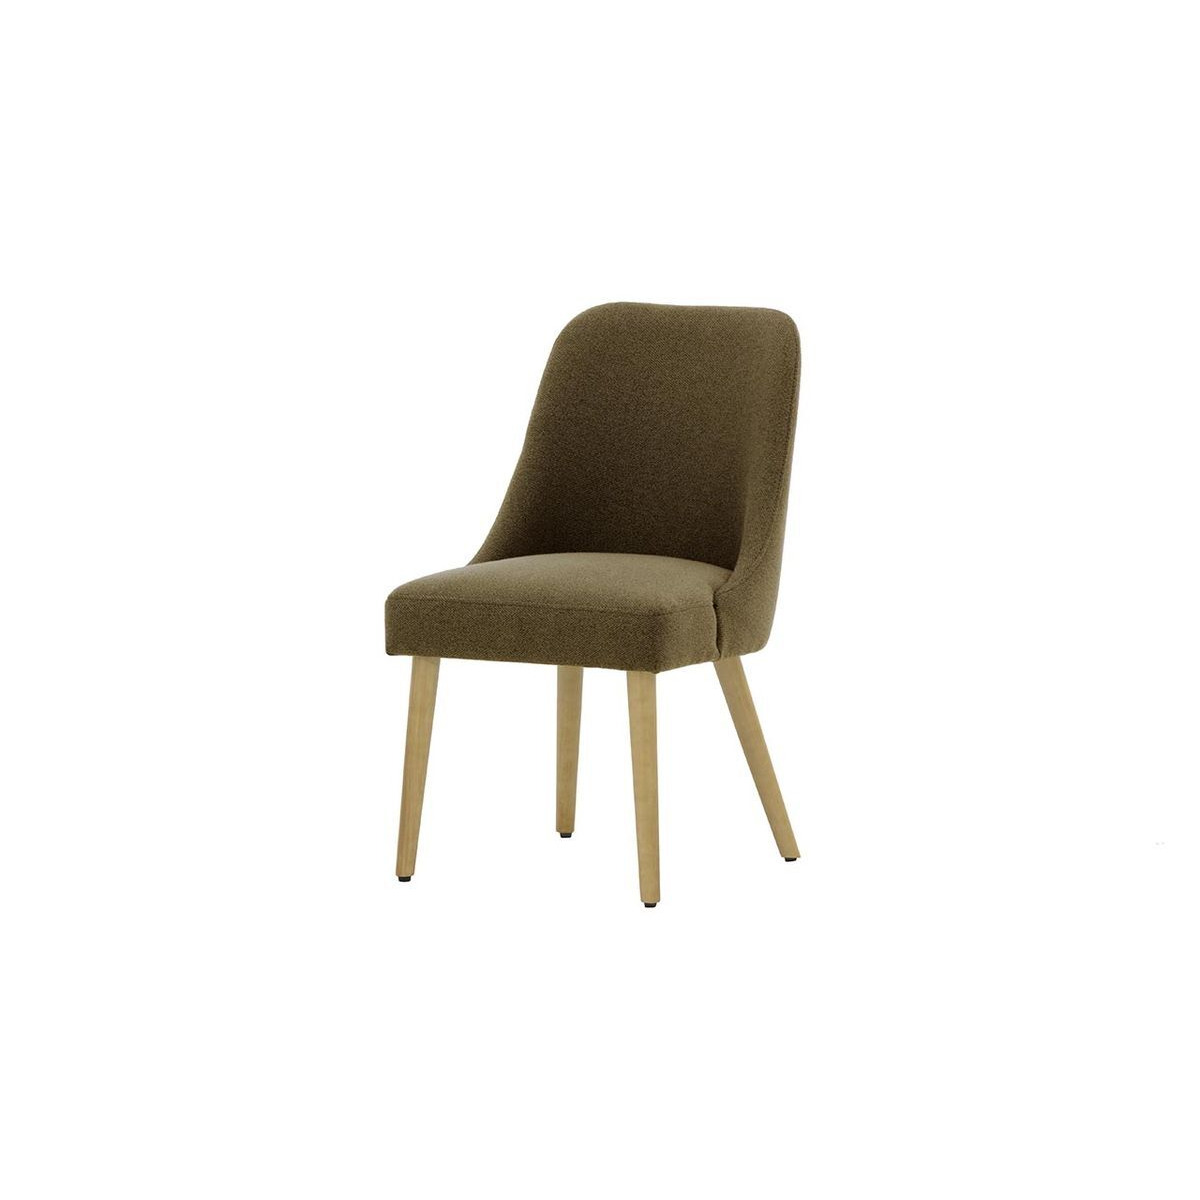 Albion Dining Chair, brown, Leg colour: like oak - image 1